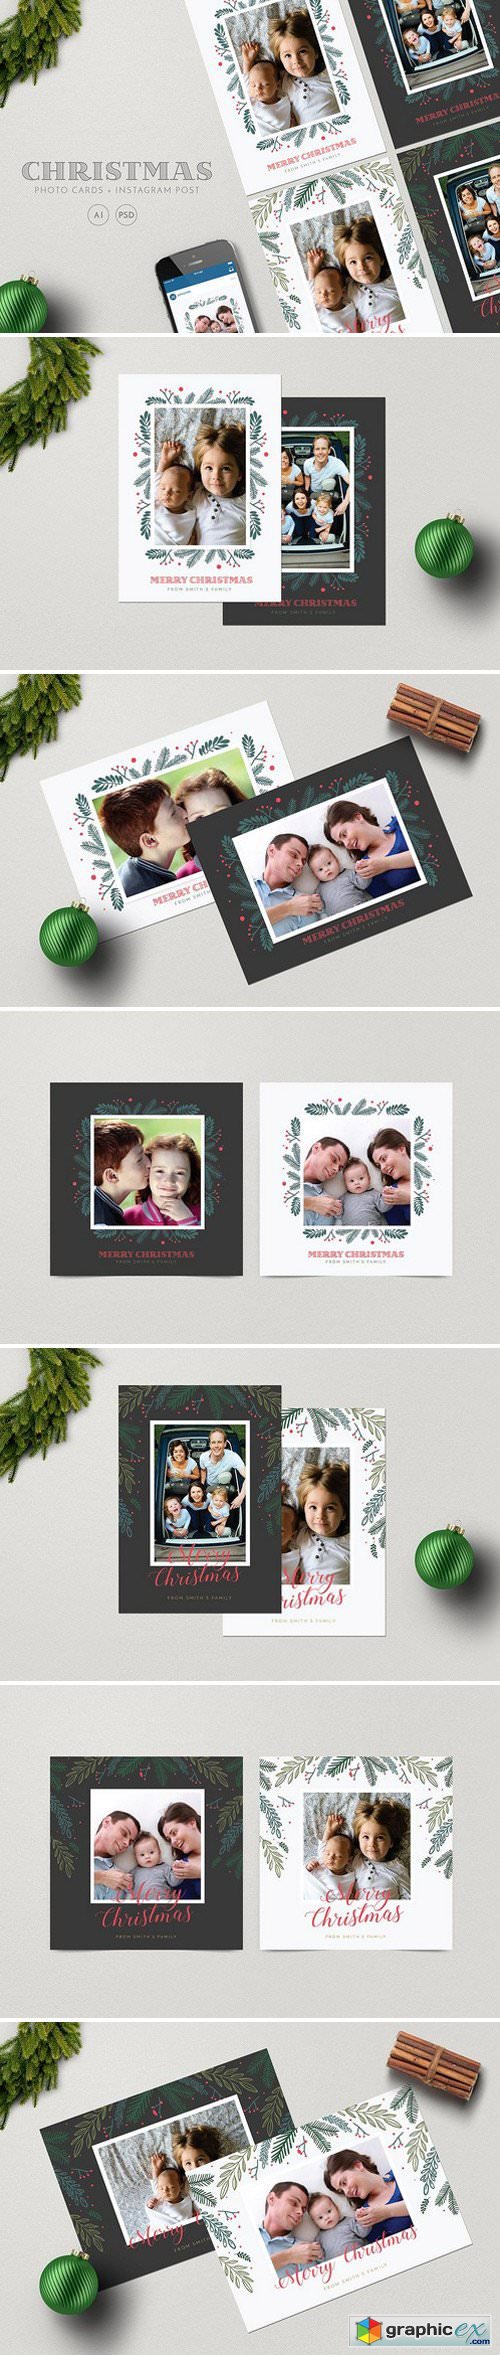 Christmas Photo Cards + Instagram